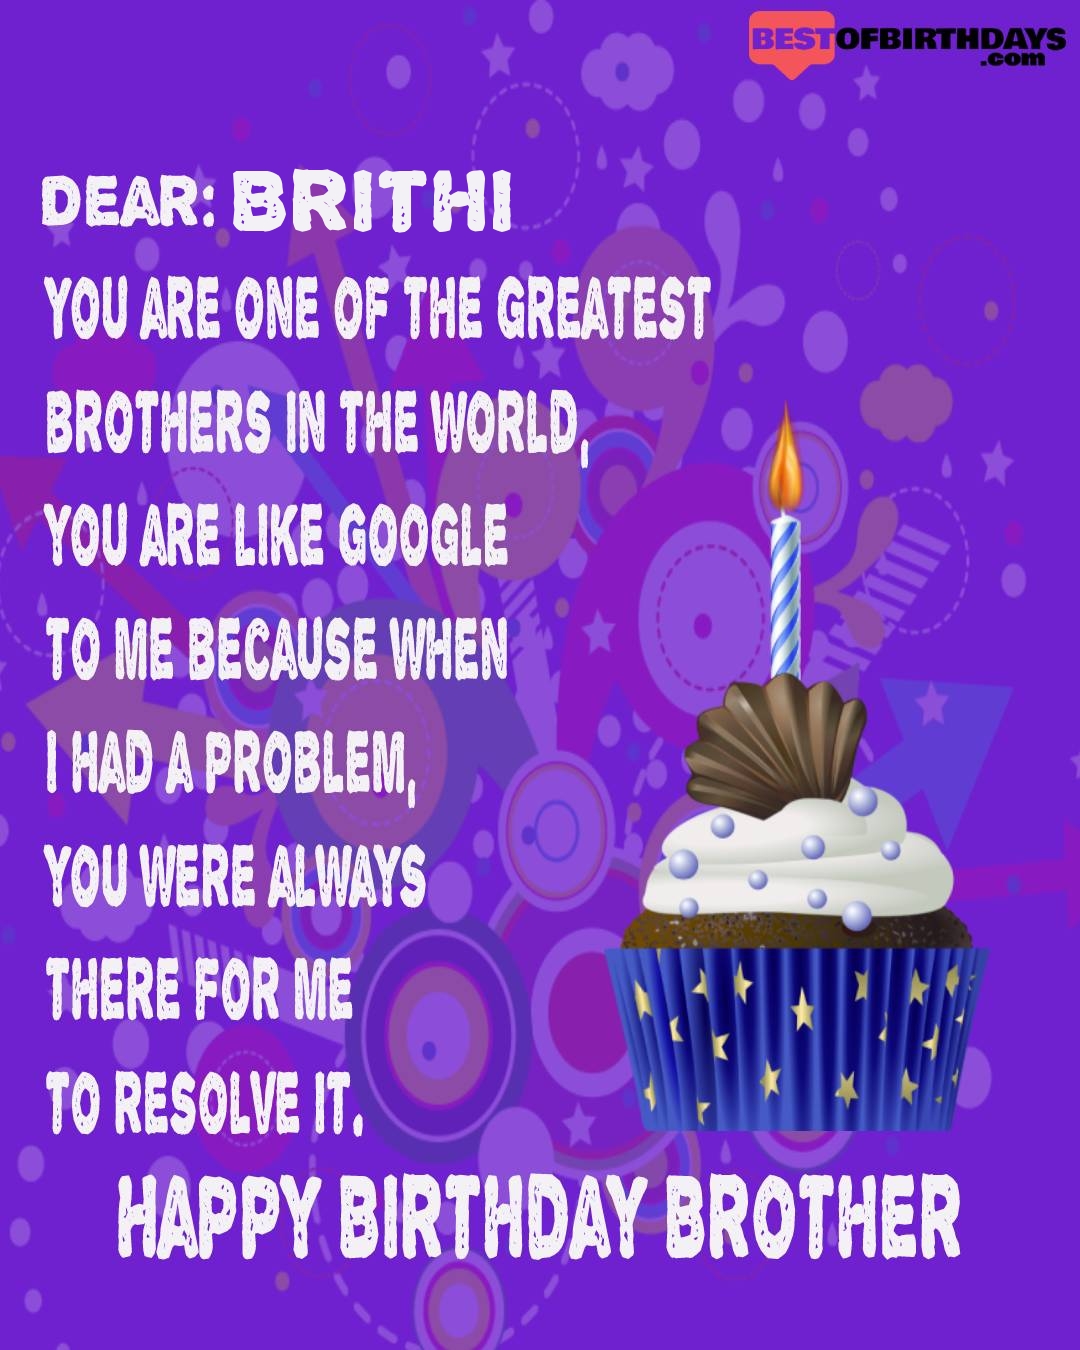 Happy birthday brithi bhai brother bro